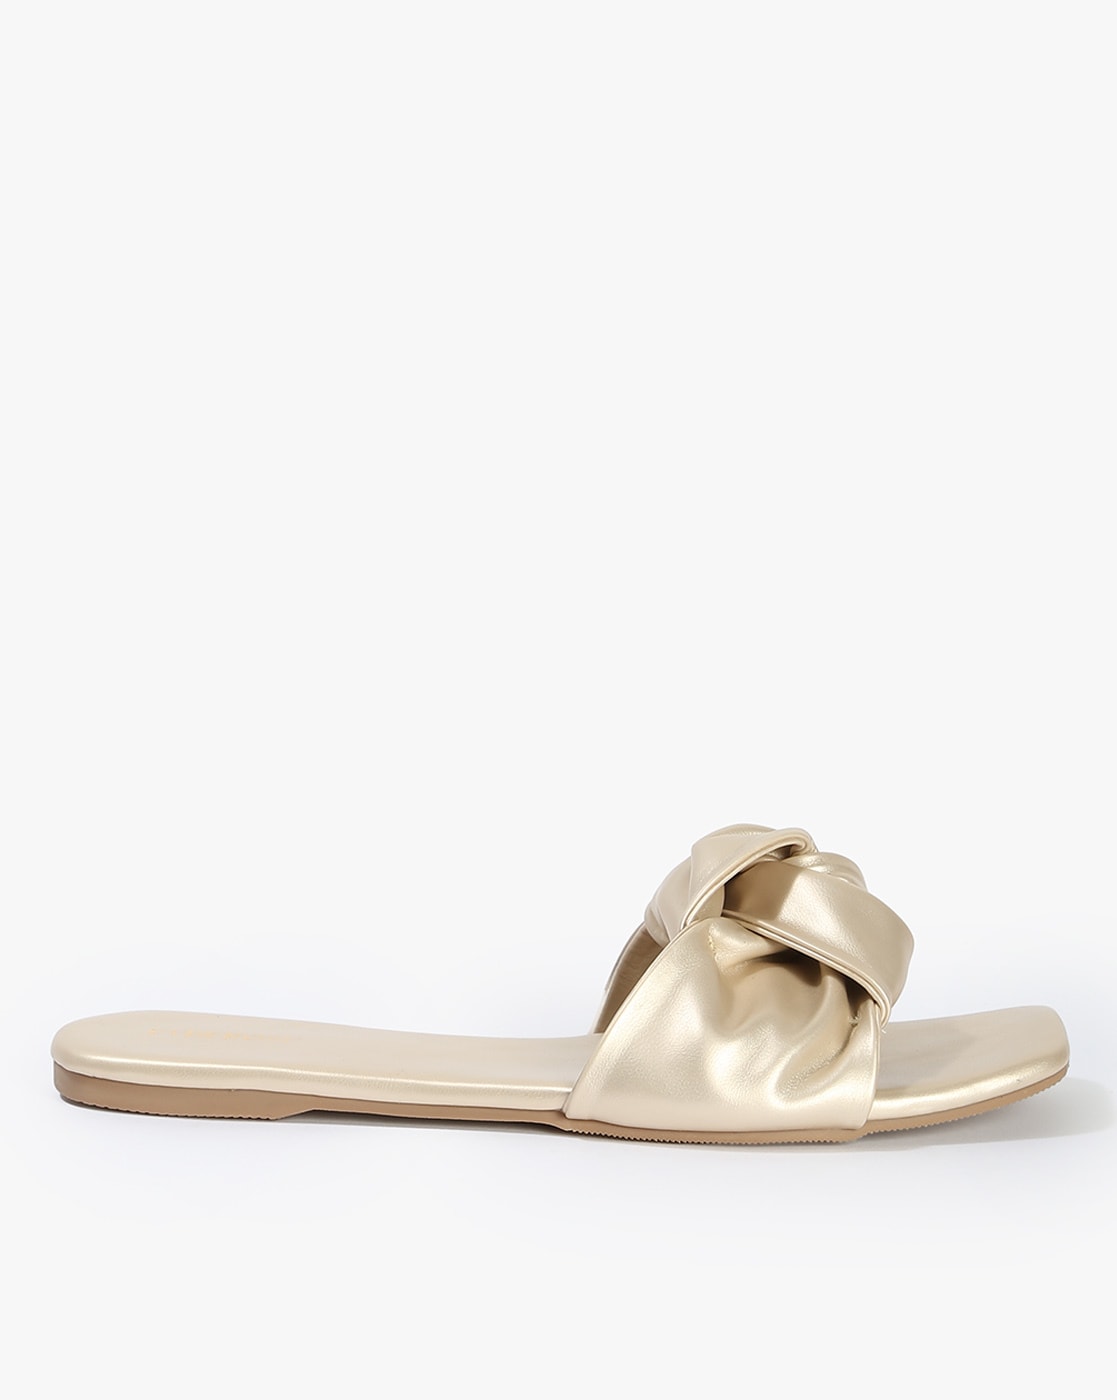 zara gold flat sandals size 40/9 US | eBay